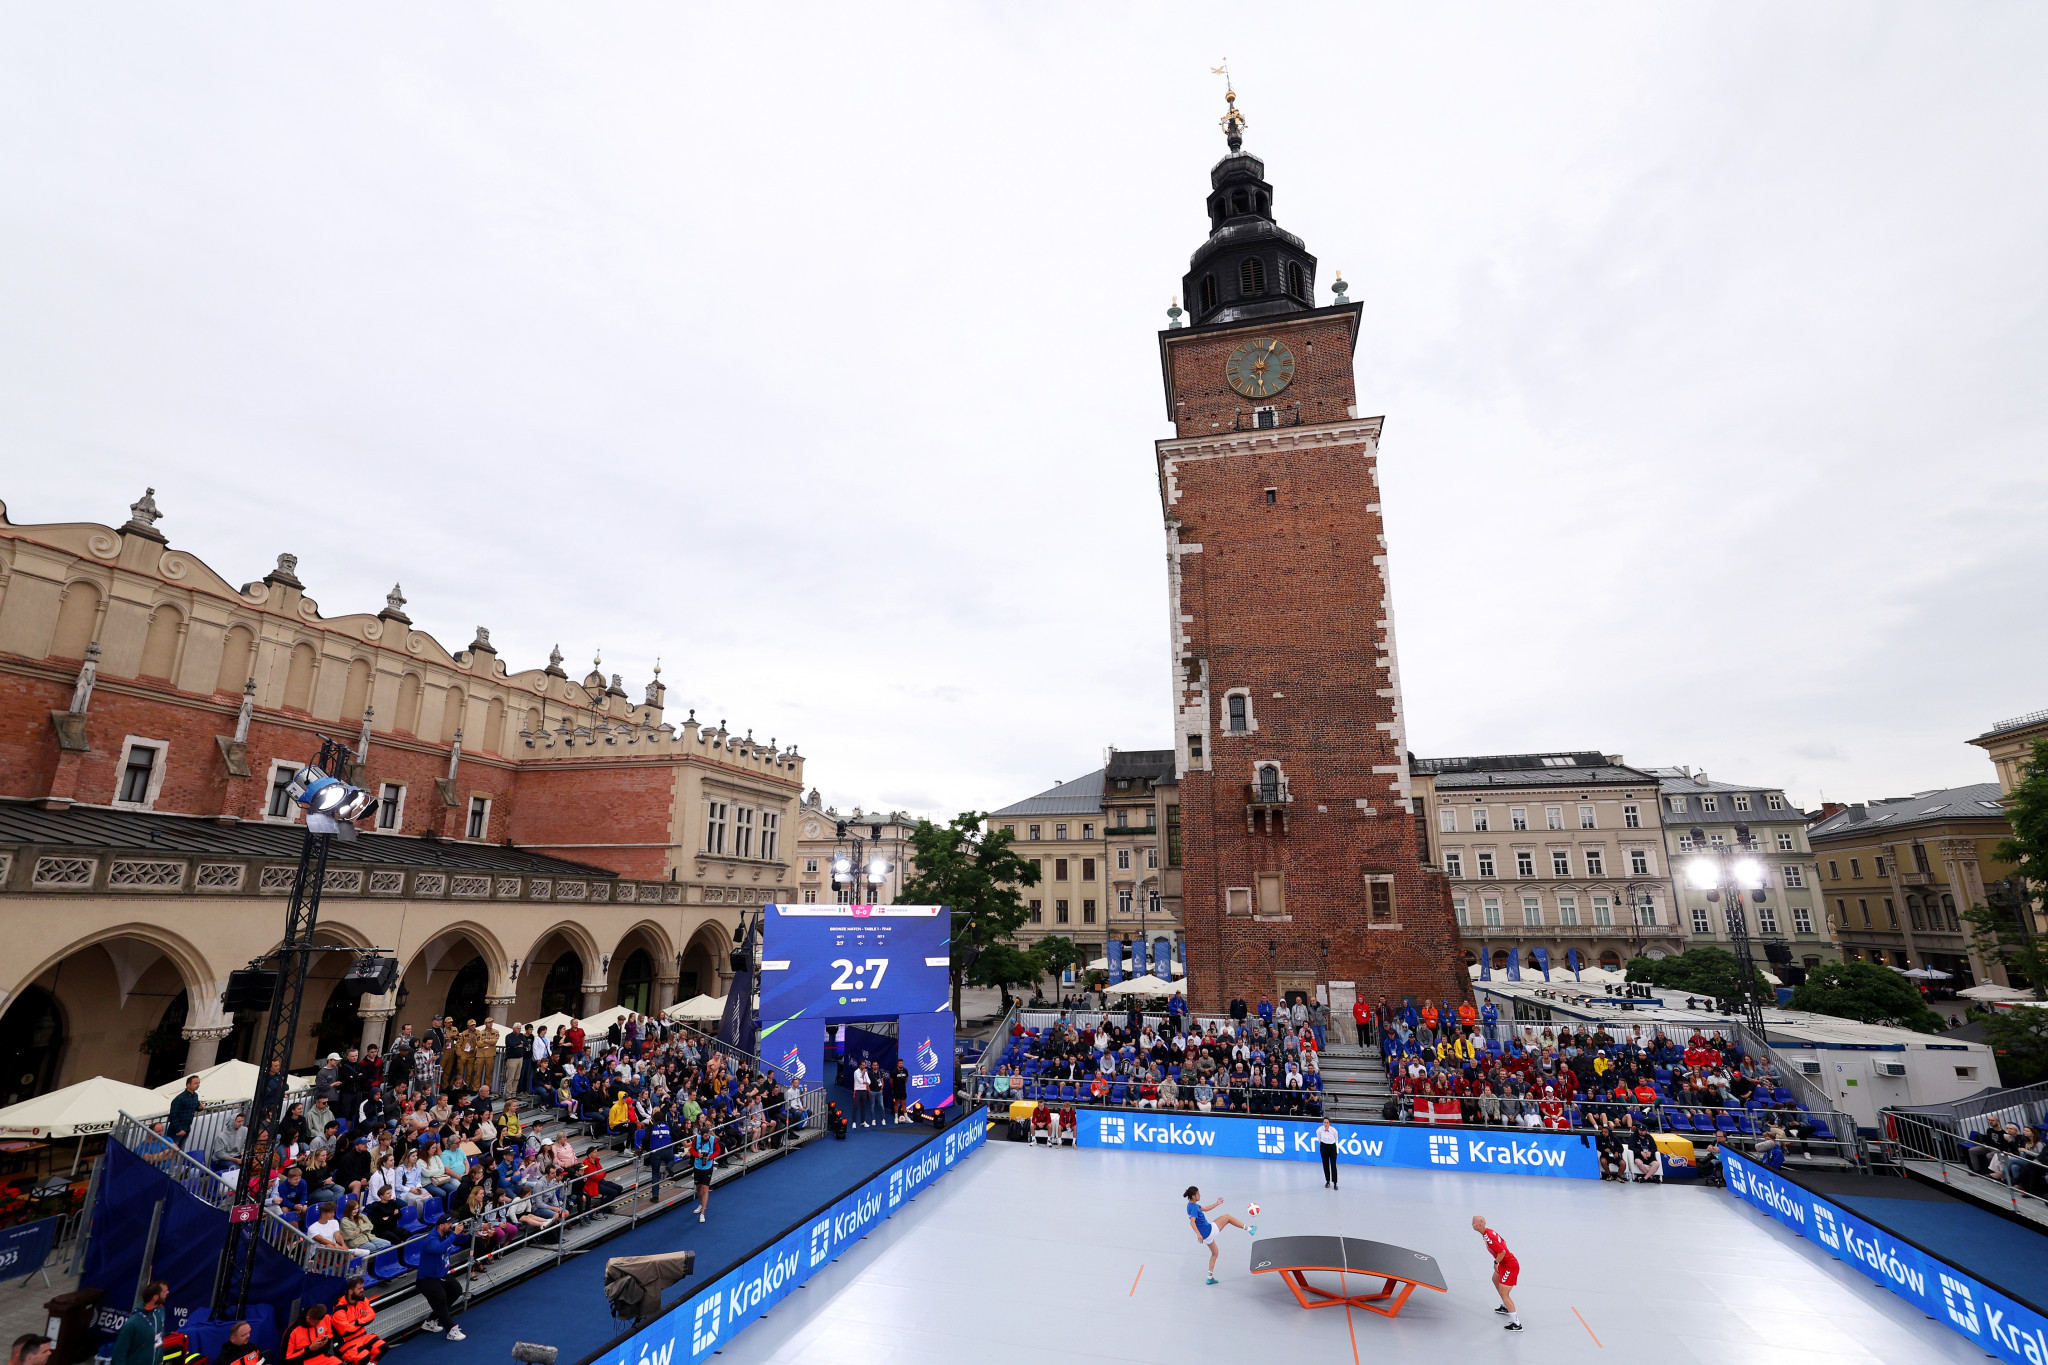 Kraków-Małopolska 2023 reported as most "cost-efficient" European Games